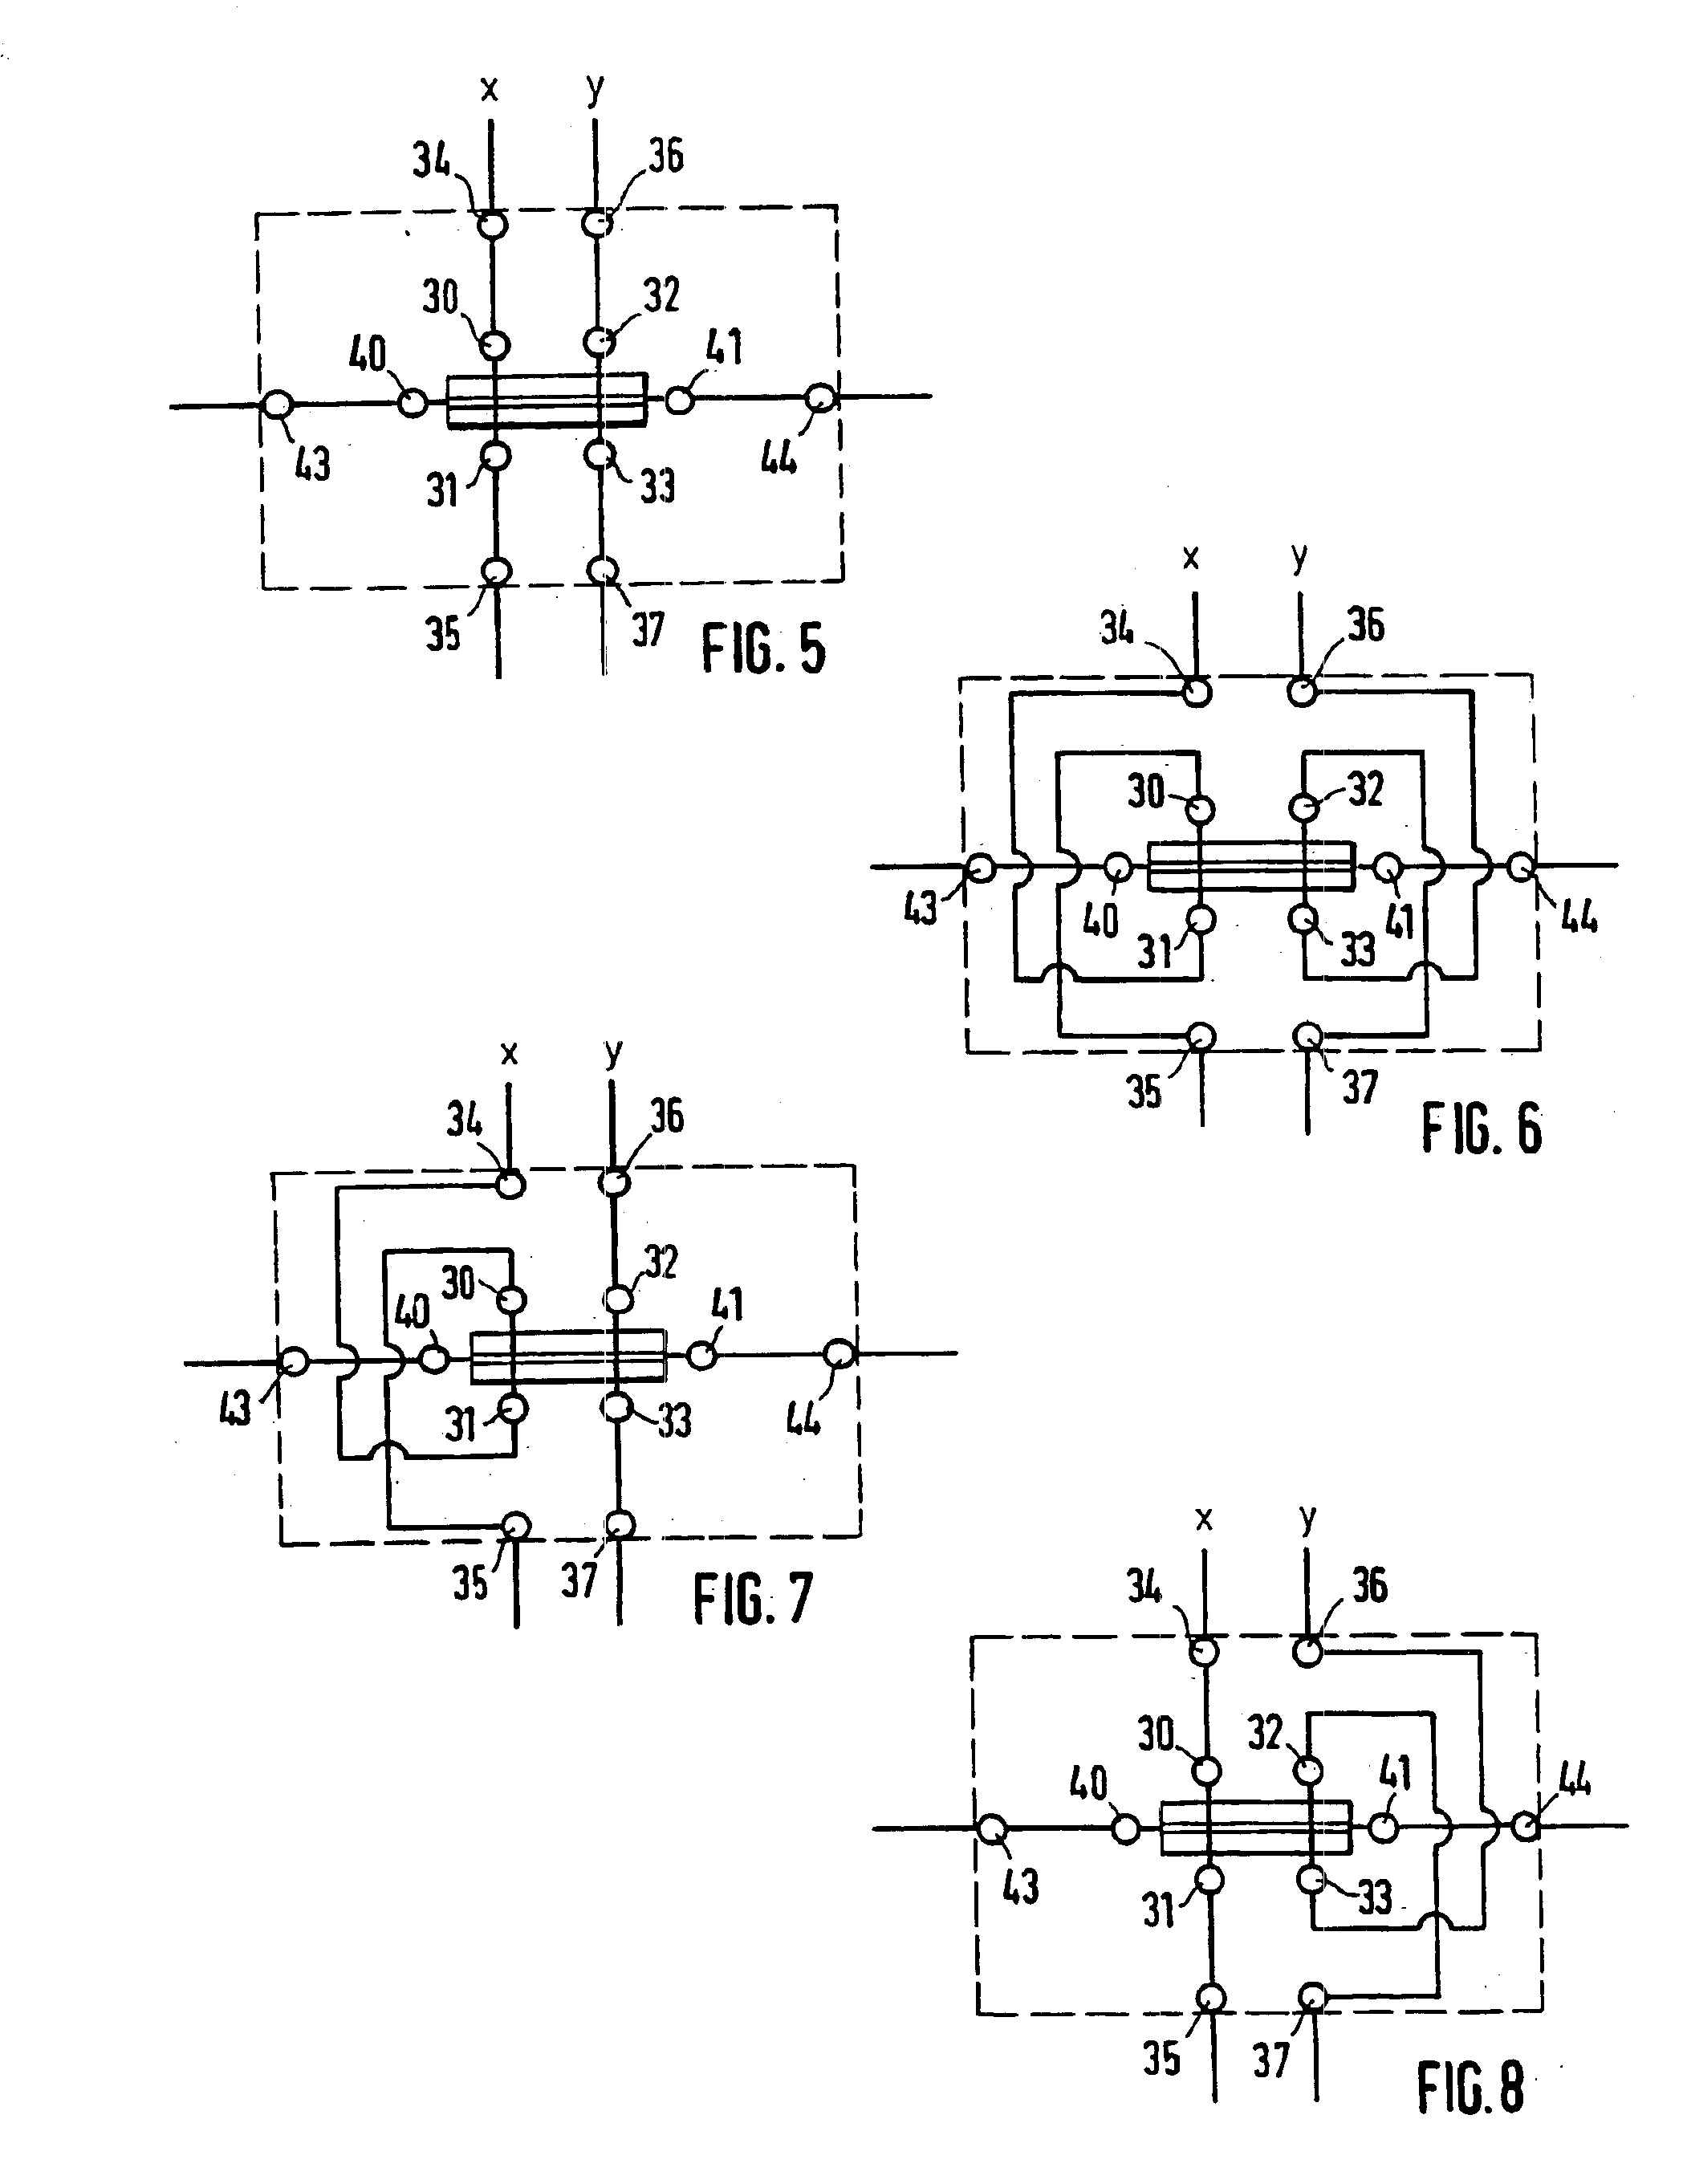 Standard cell arrangement for a magneto-resistive component